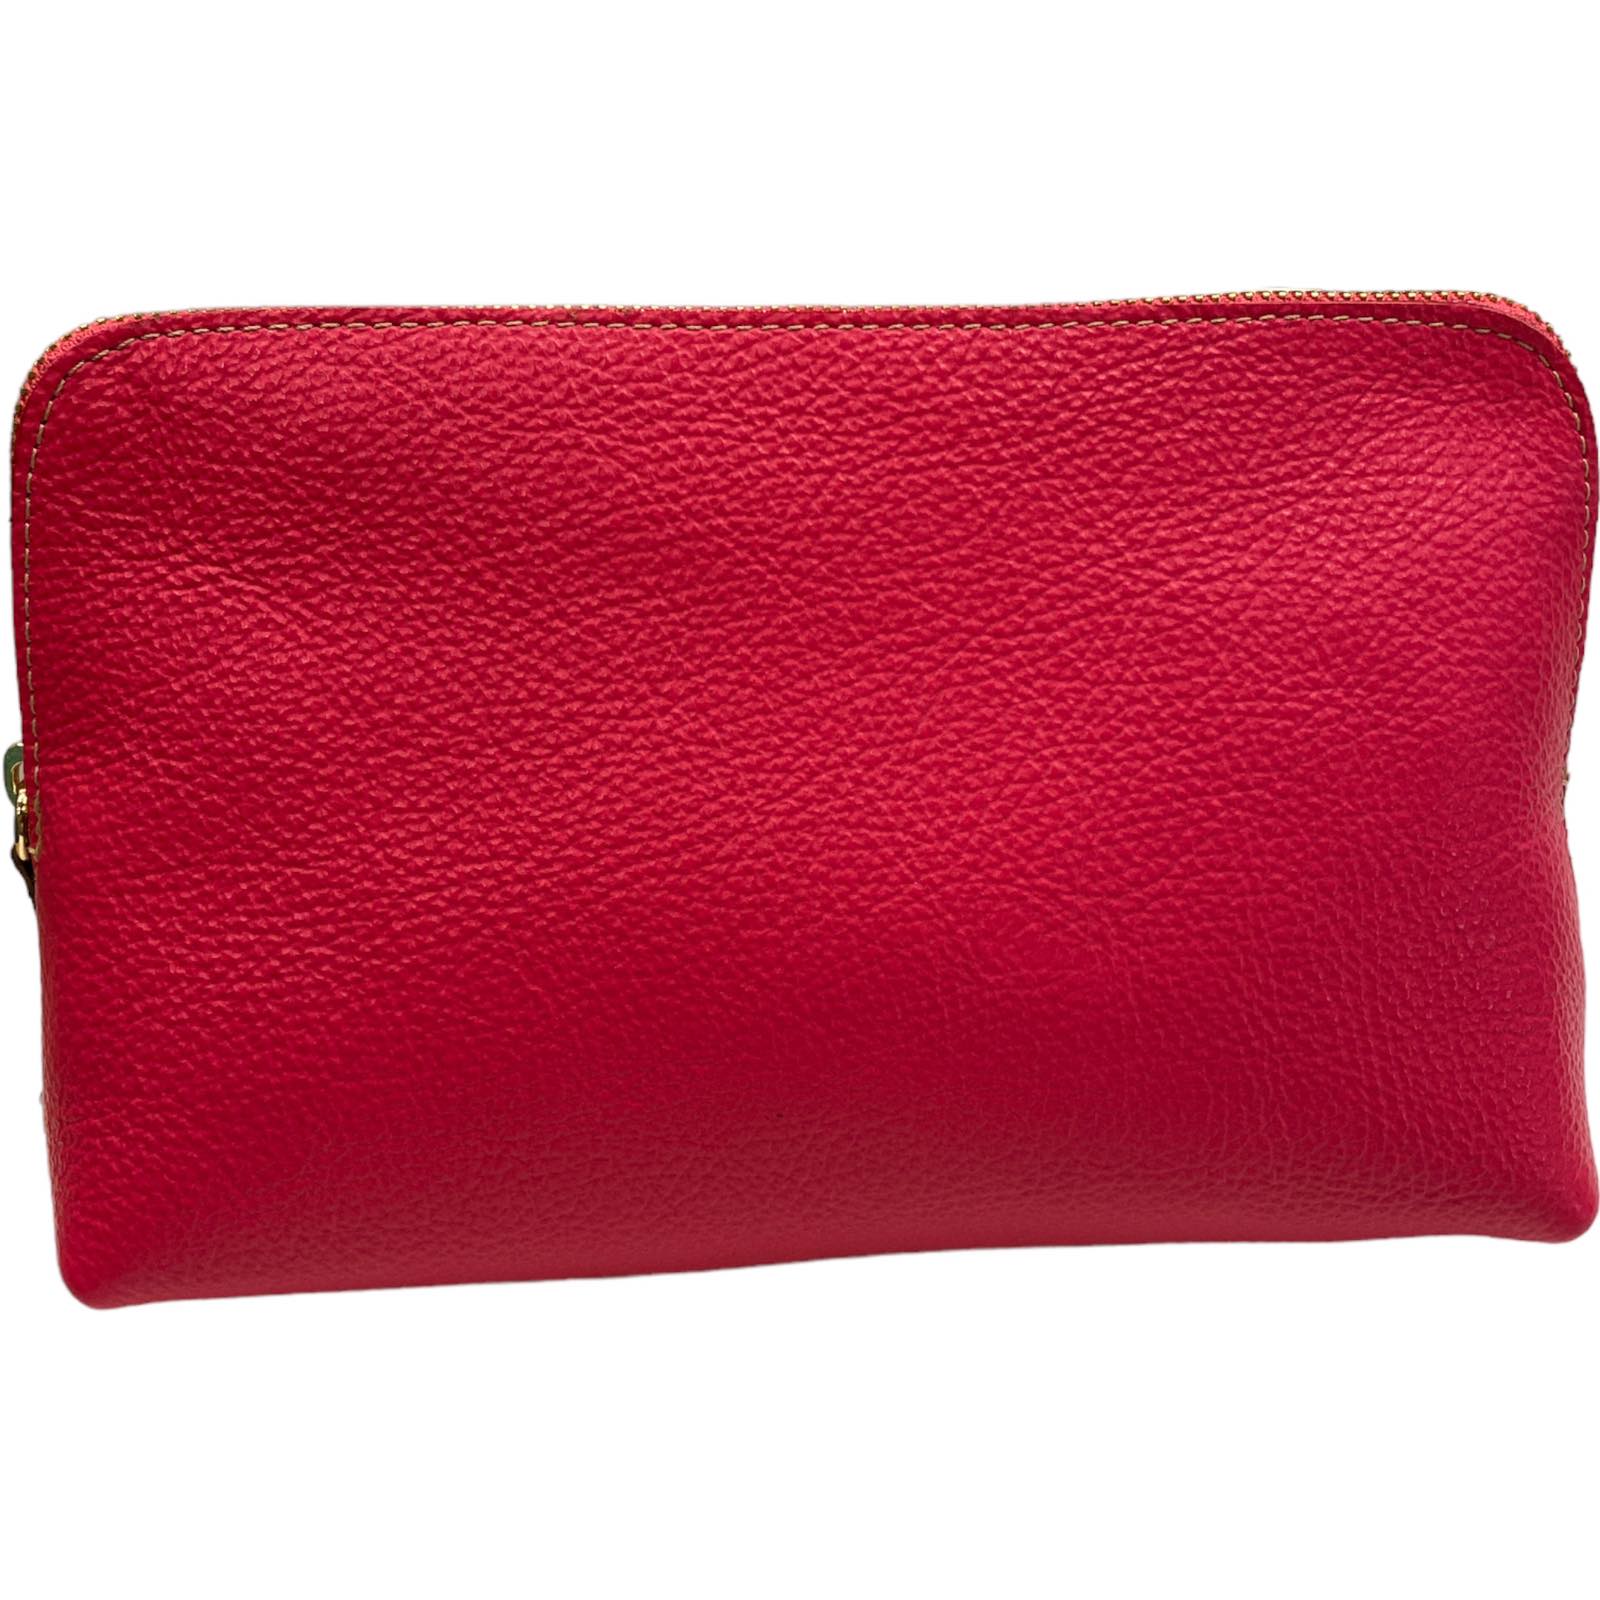 Box XL. Raspberry pink leather messenger bag